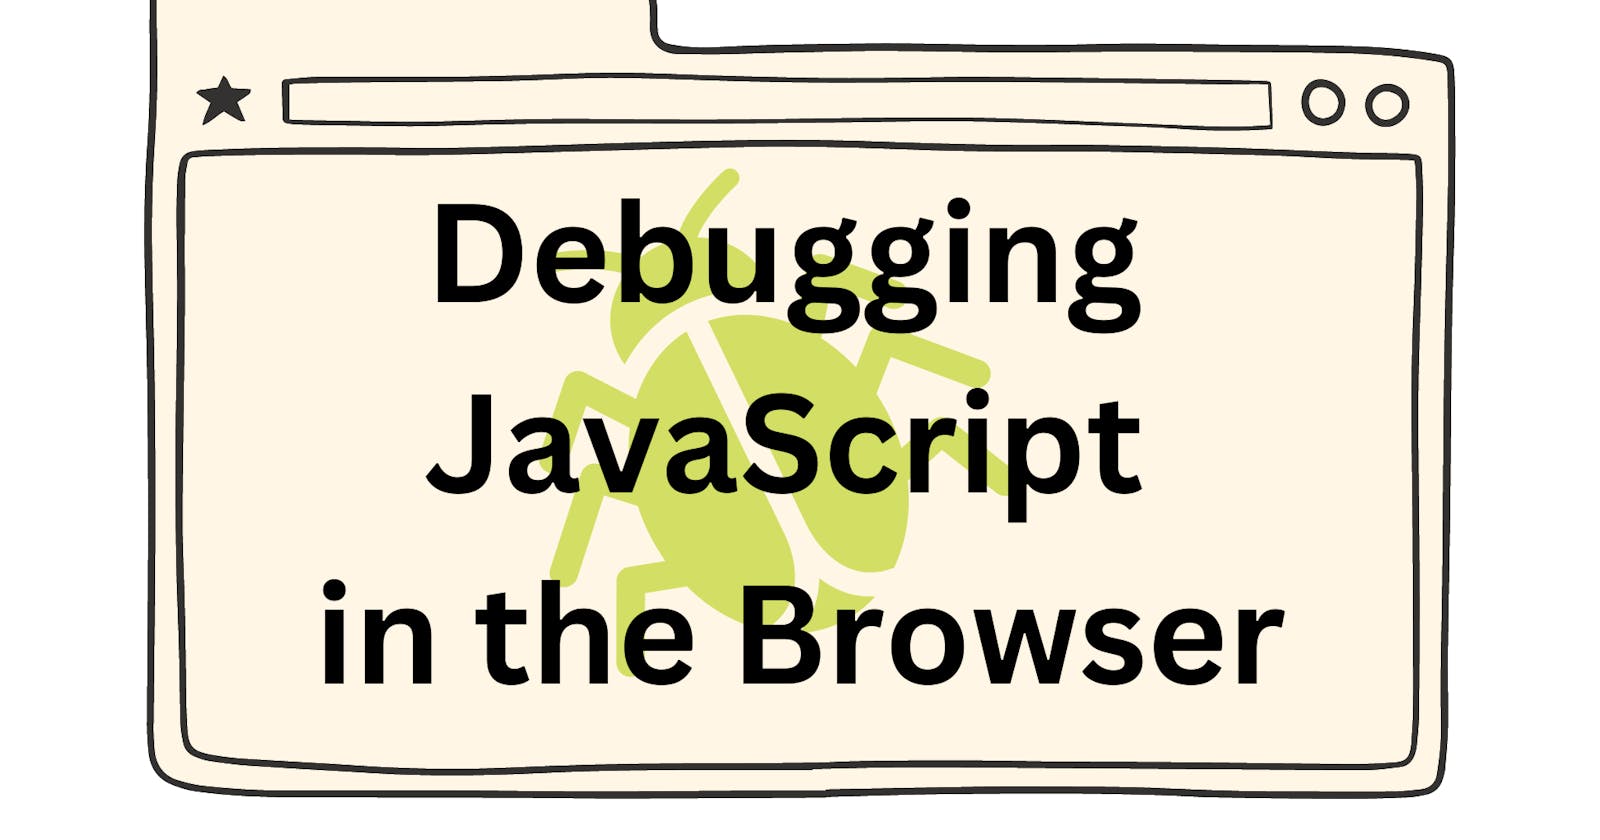 Debugging JavaScript in the Browser